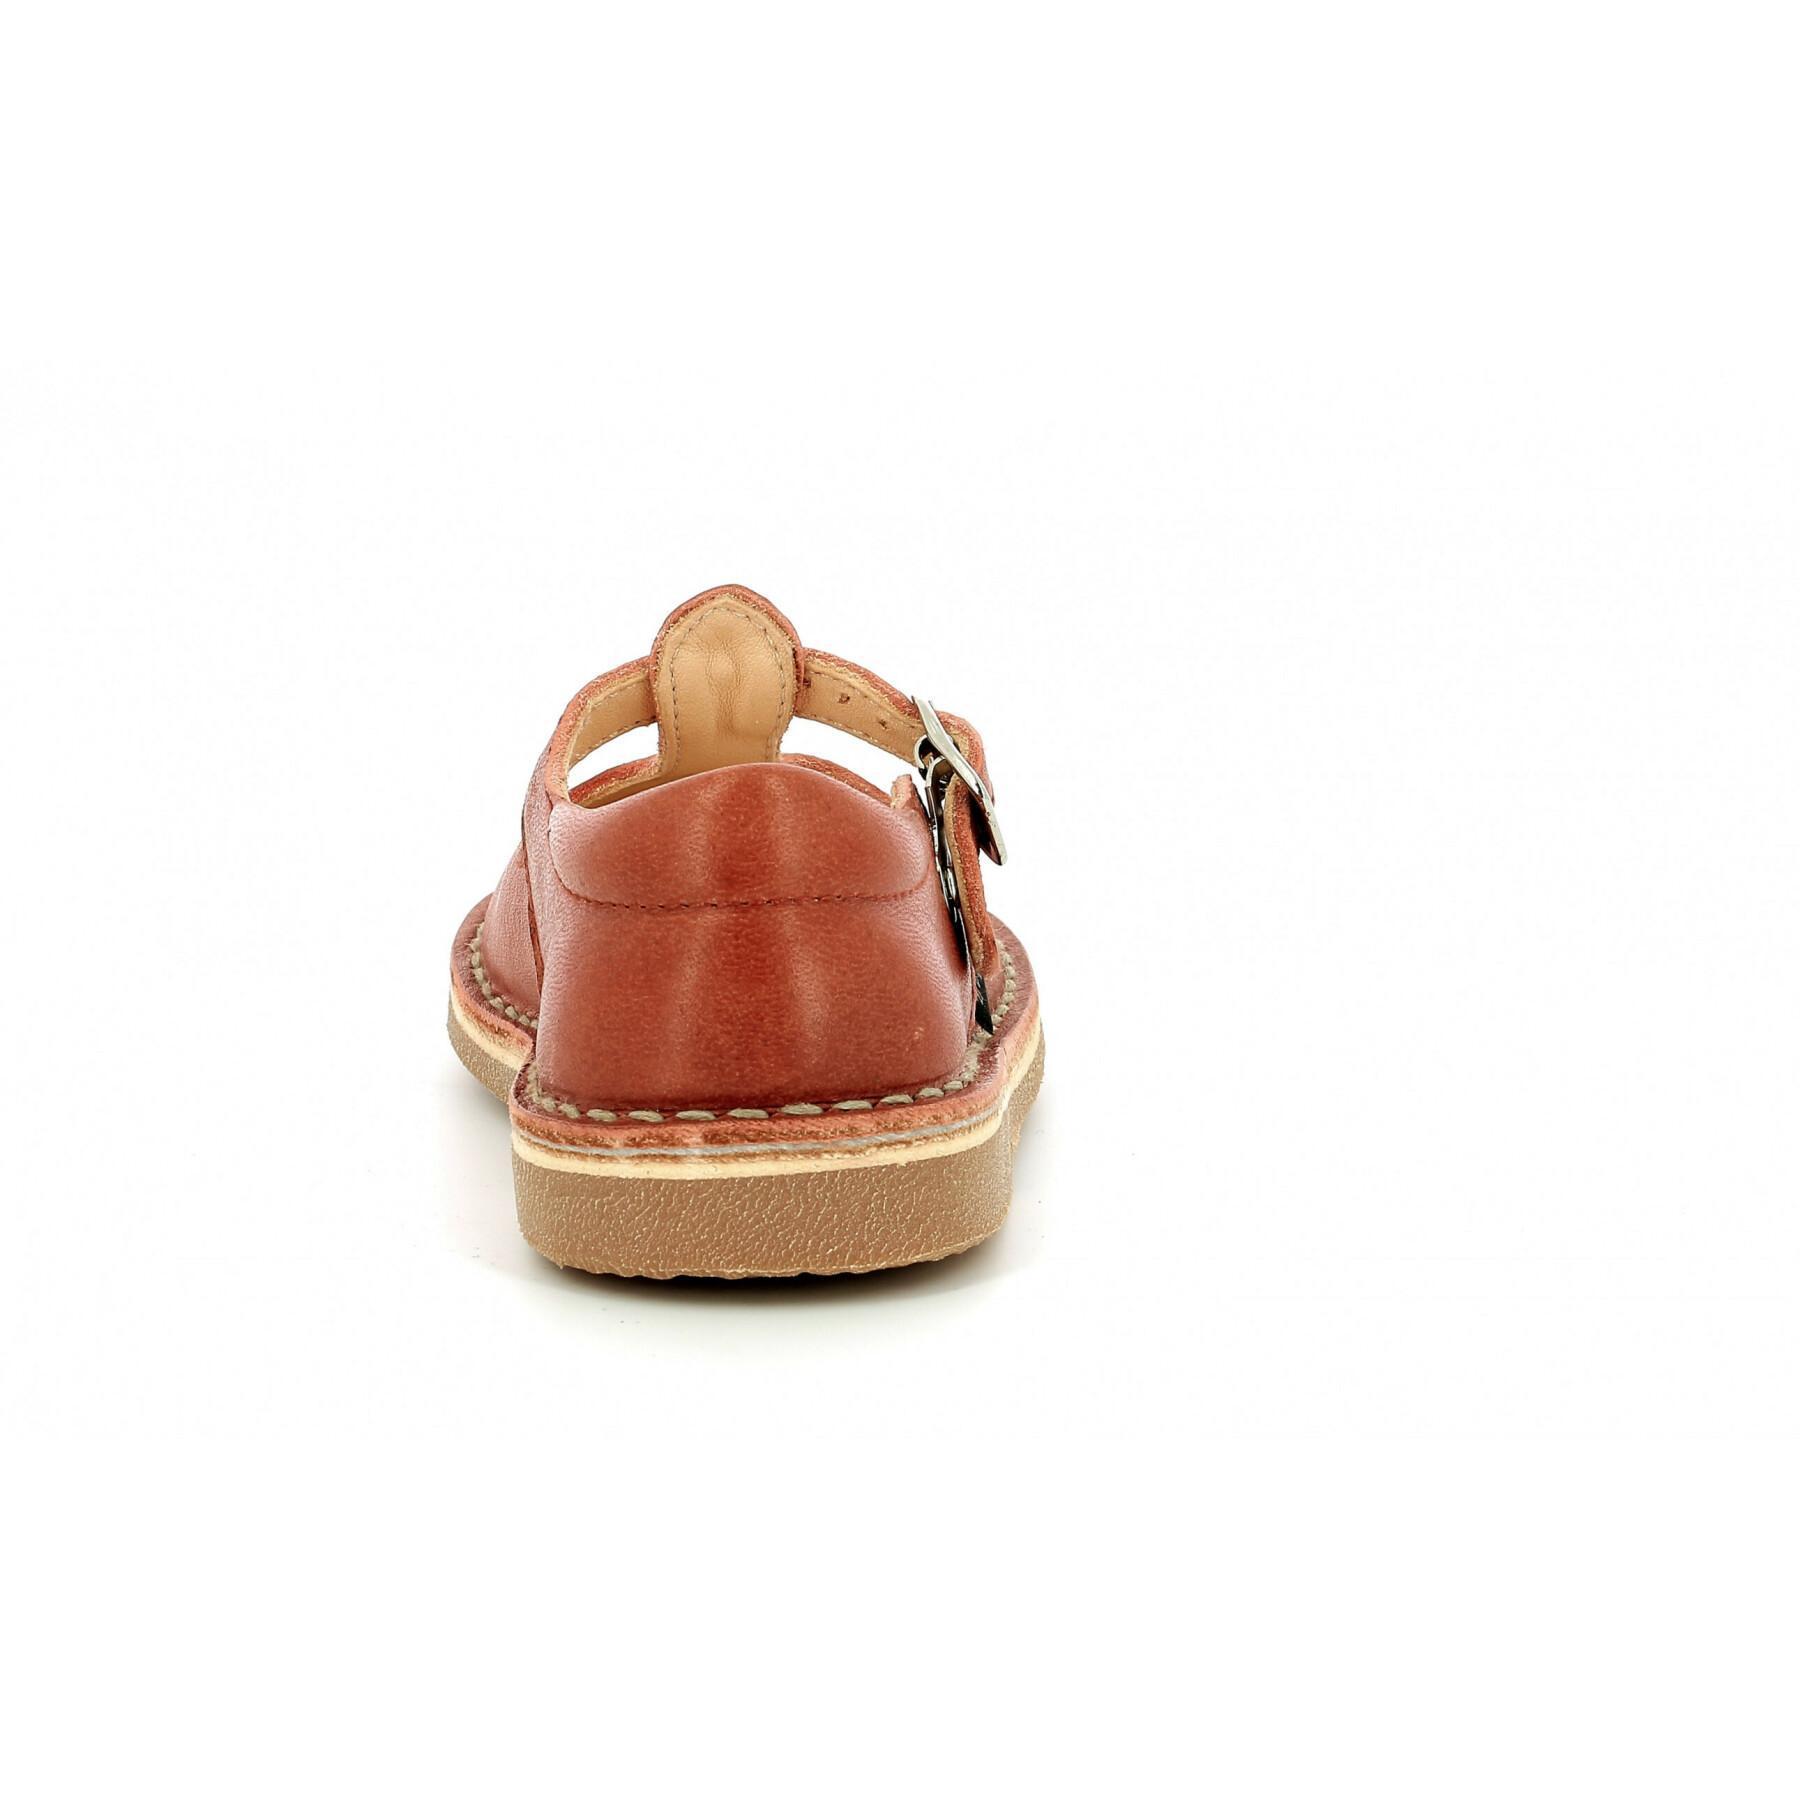 Baby sandals Aster Dingo-2